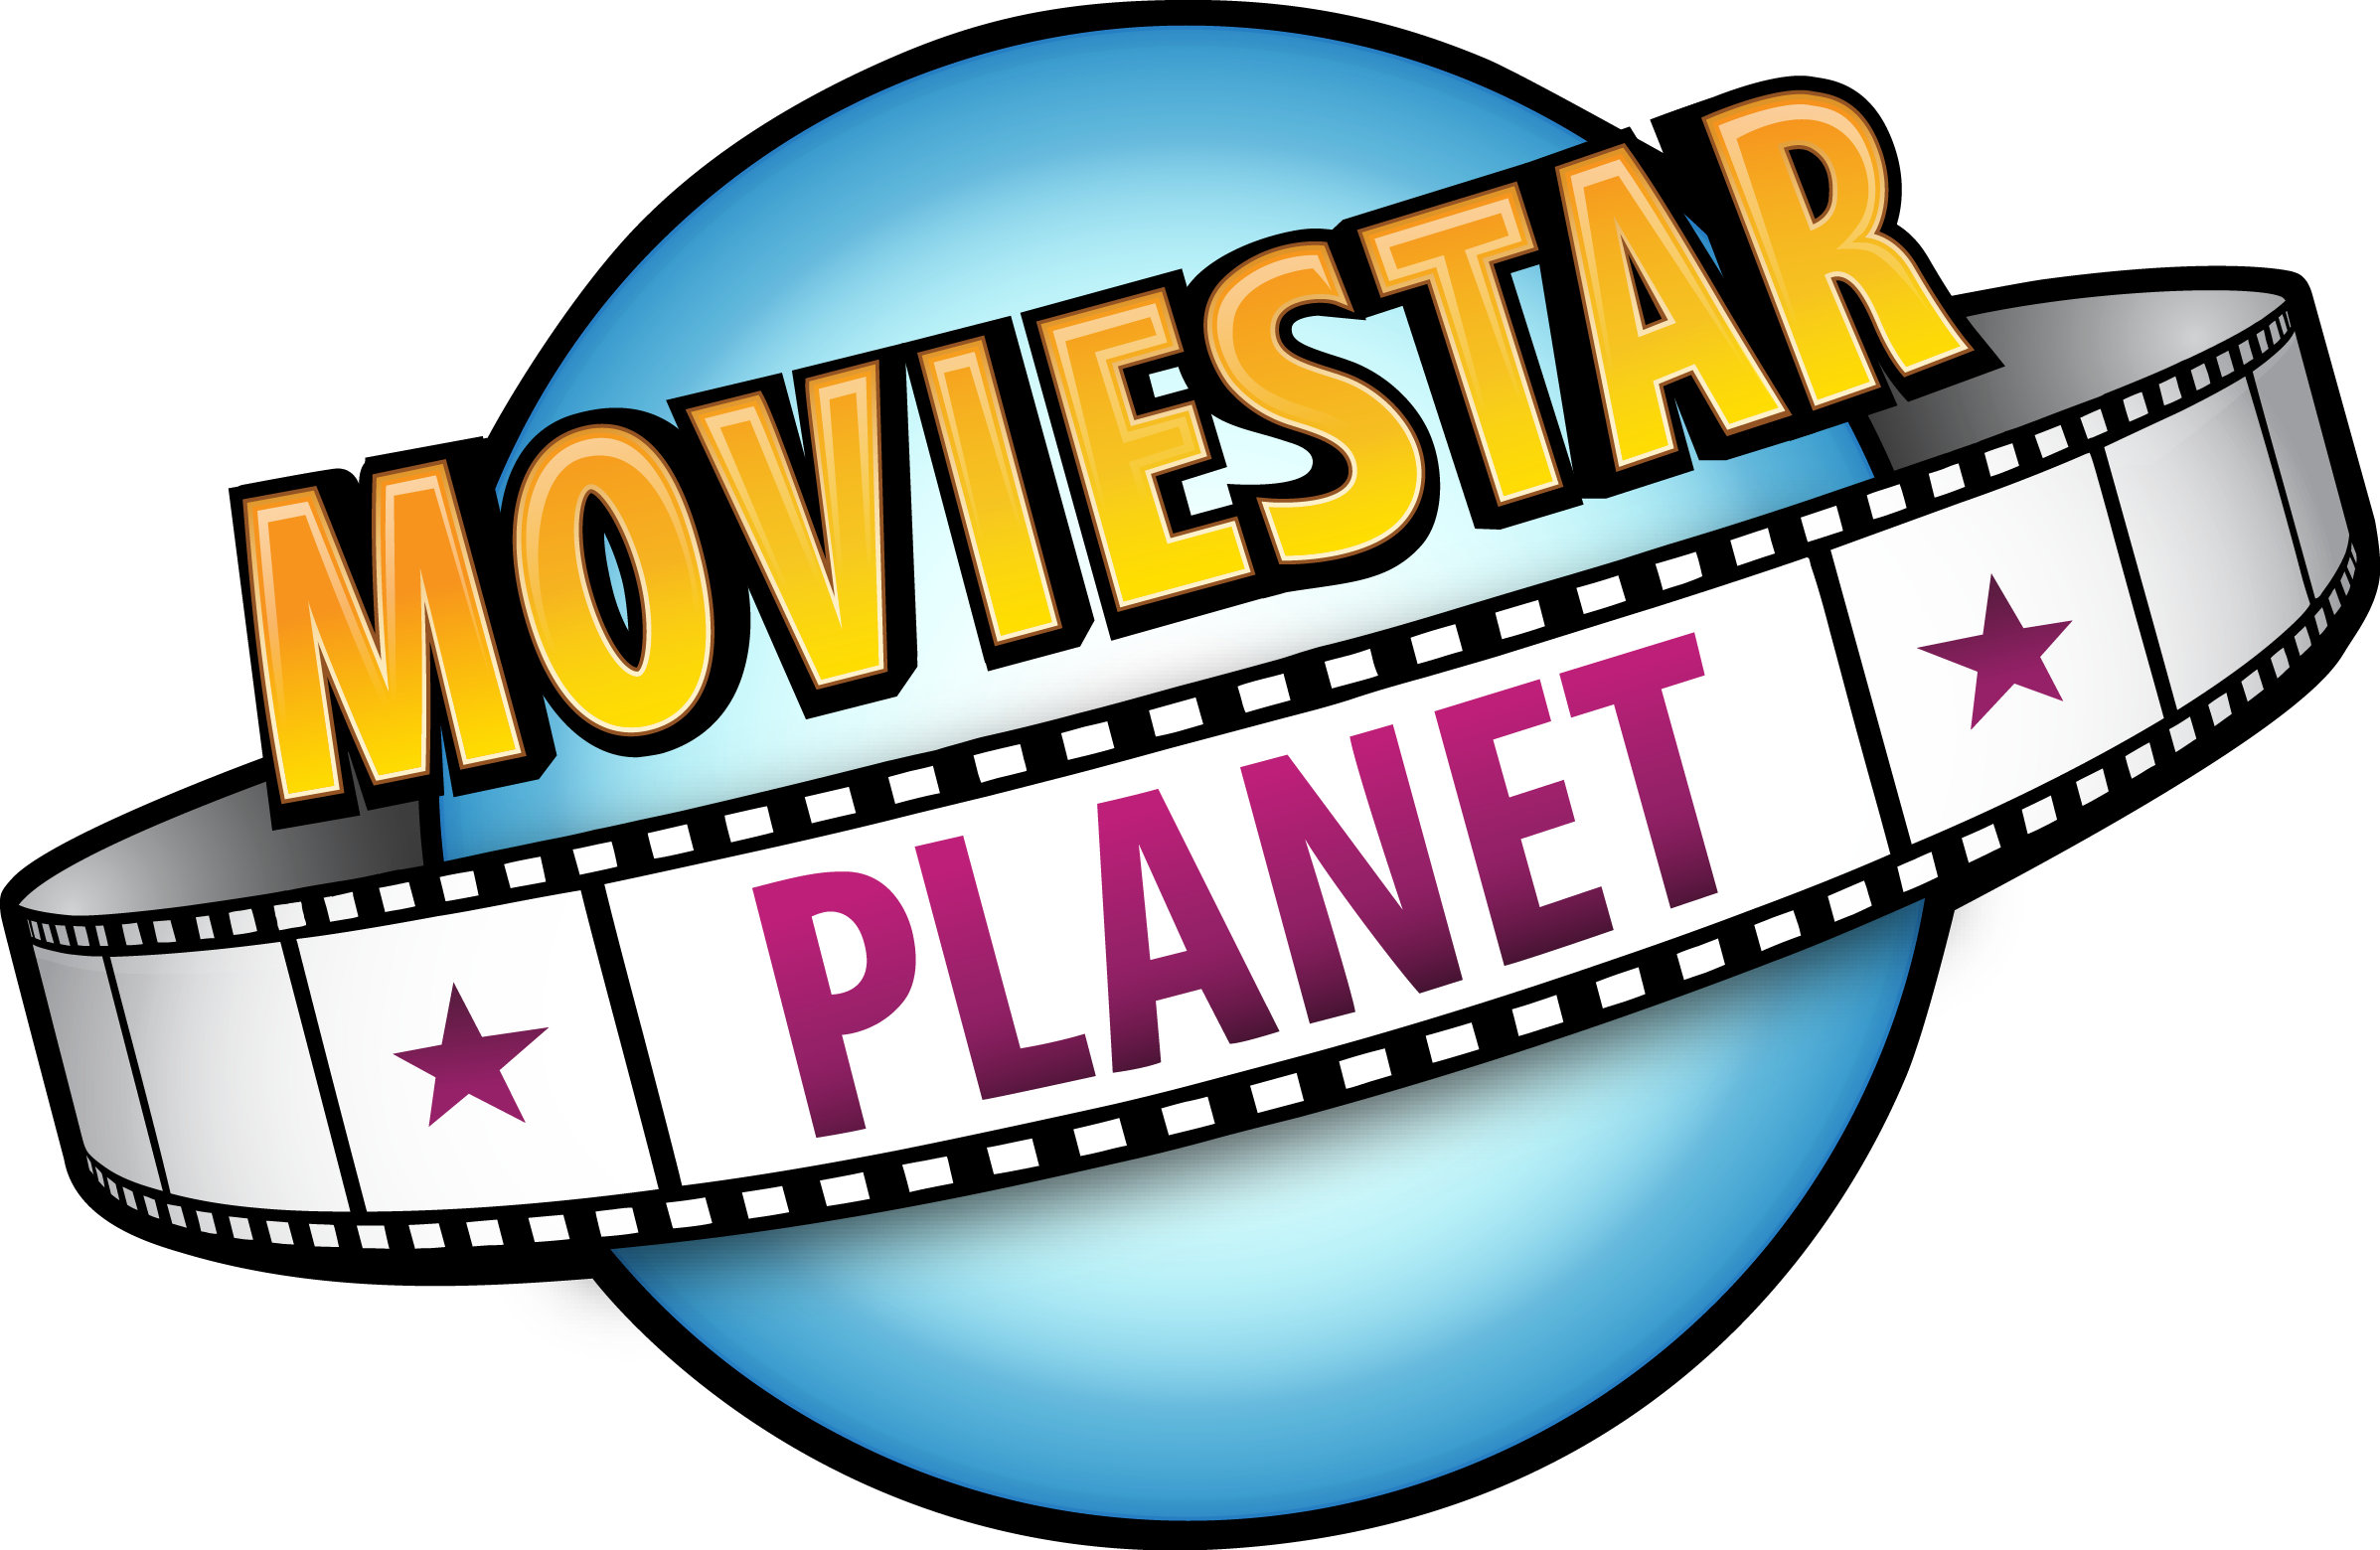 Movie Star Planet Hack